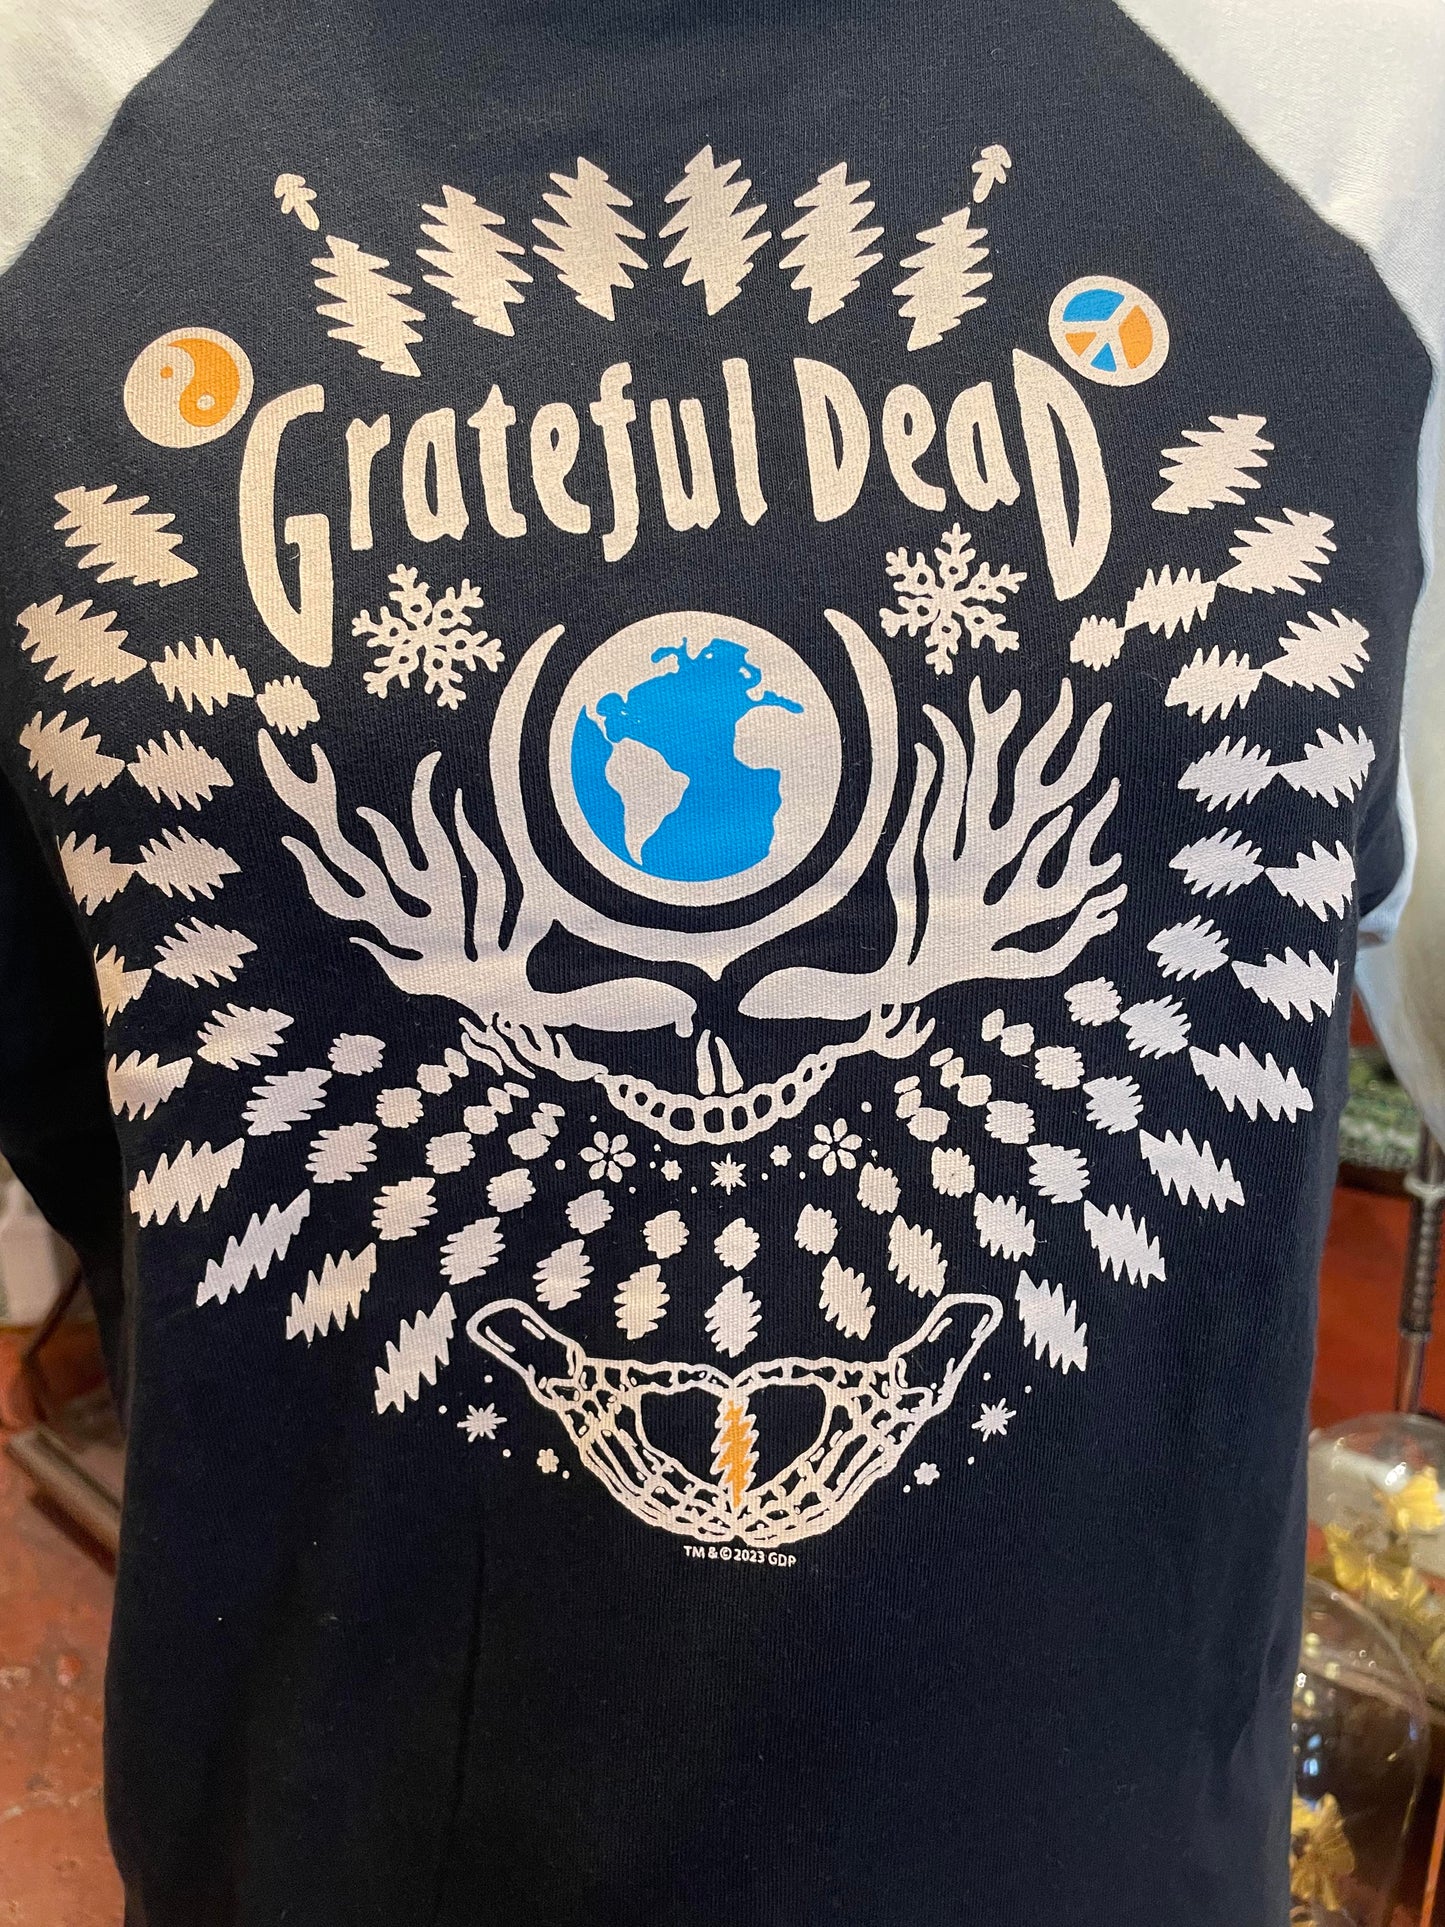 Skull & Roses Grateful Dead Truckee - La De Da